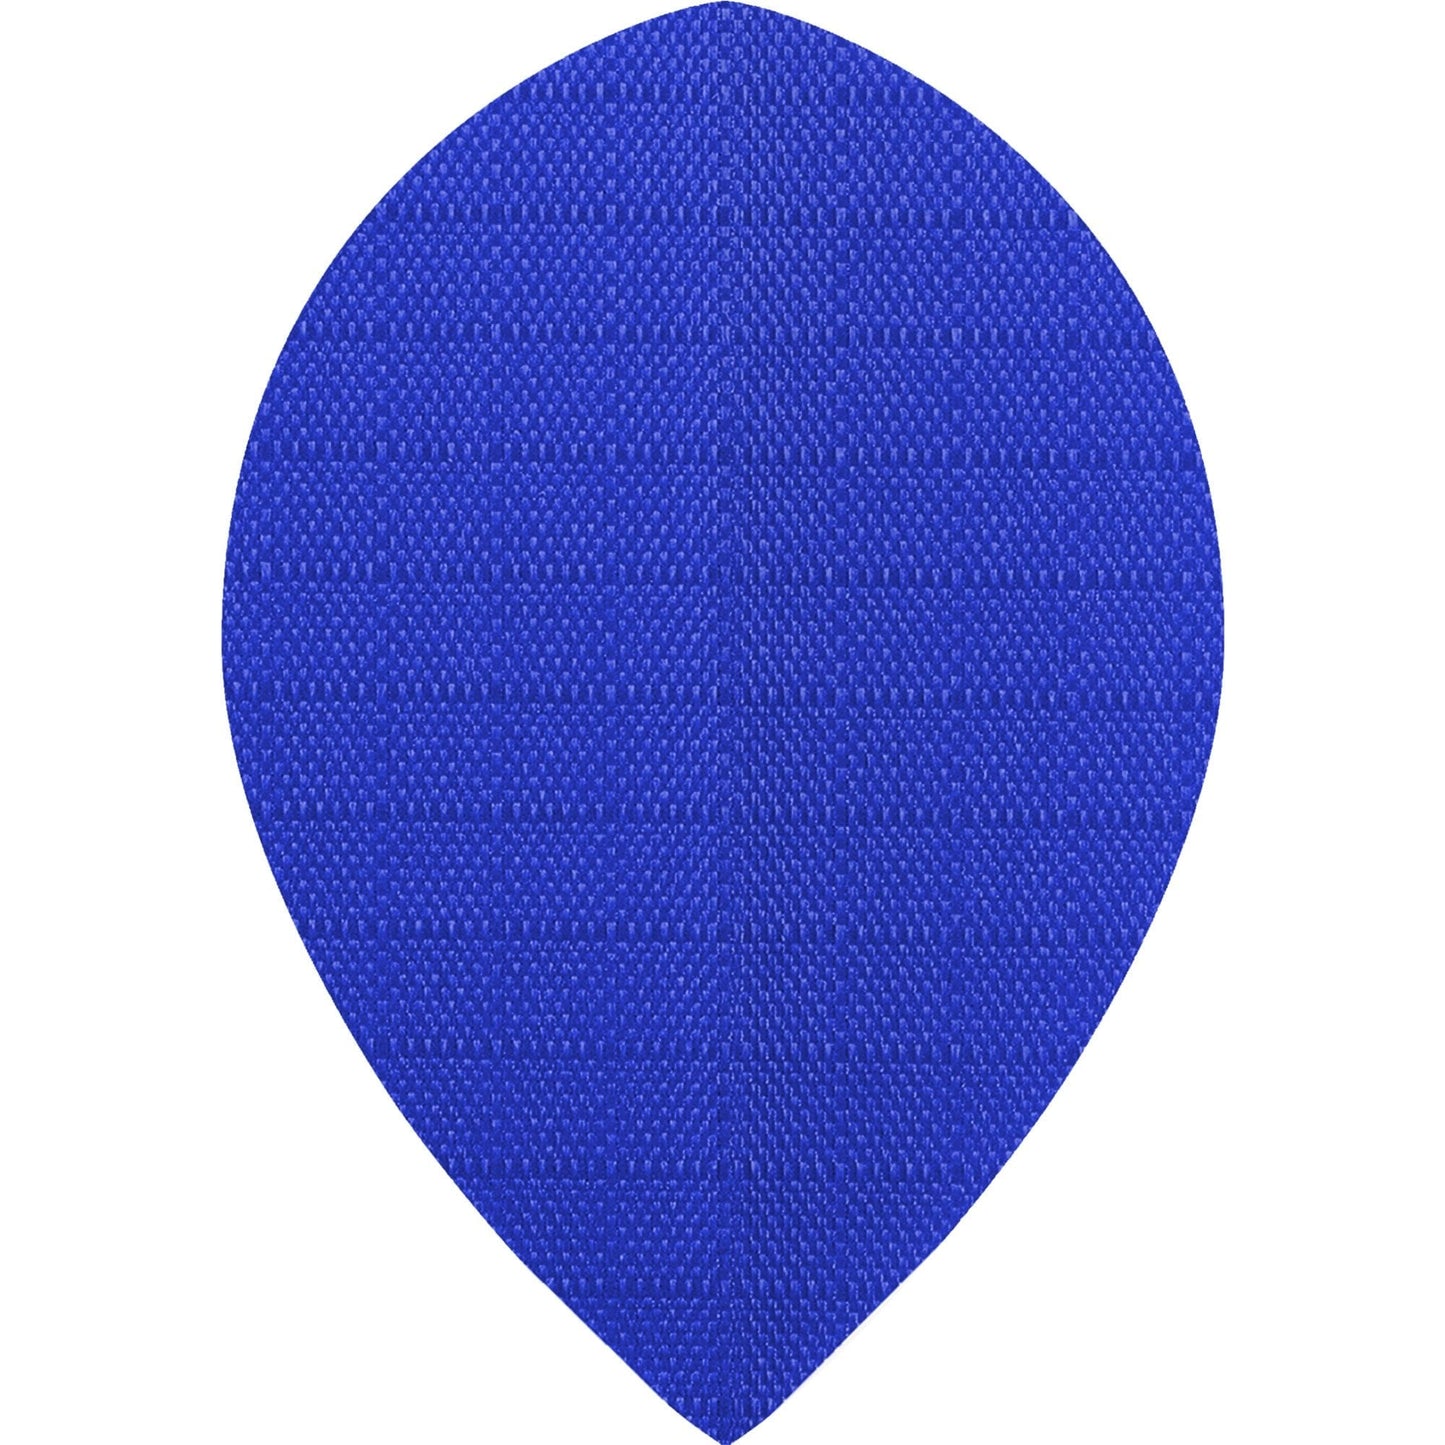 *Designa Dart Flights - Fabric Rip Stop Nylon - Longlife - Pear Blue